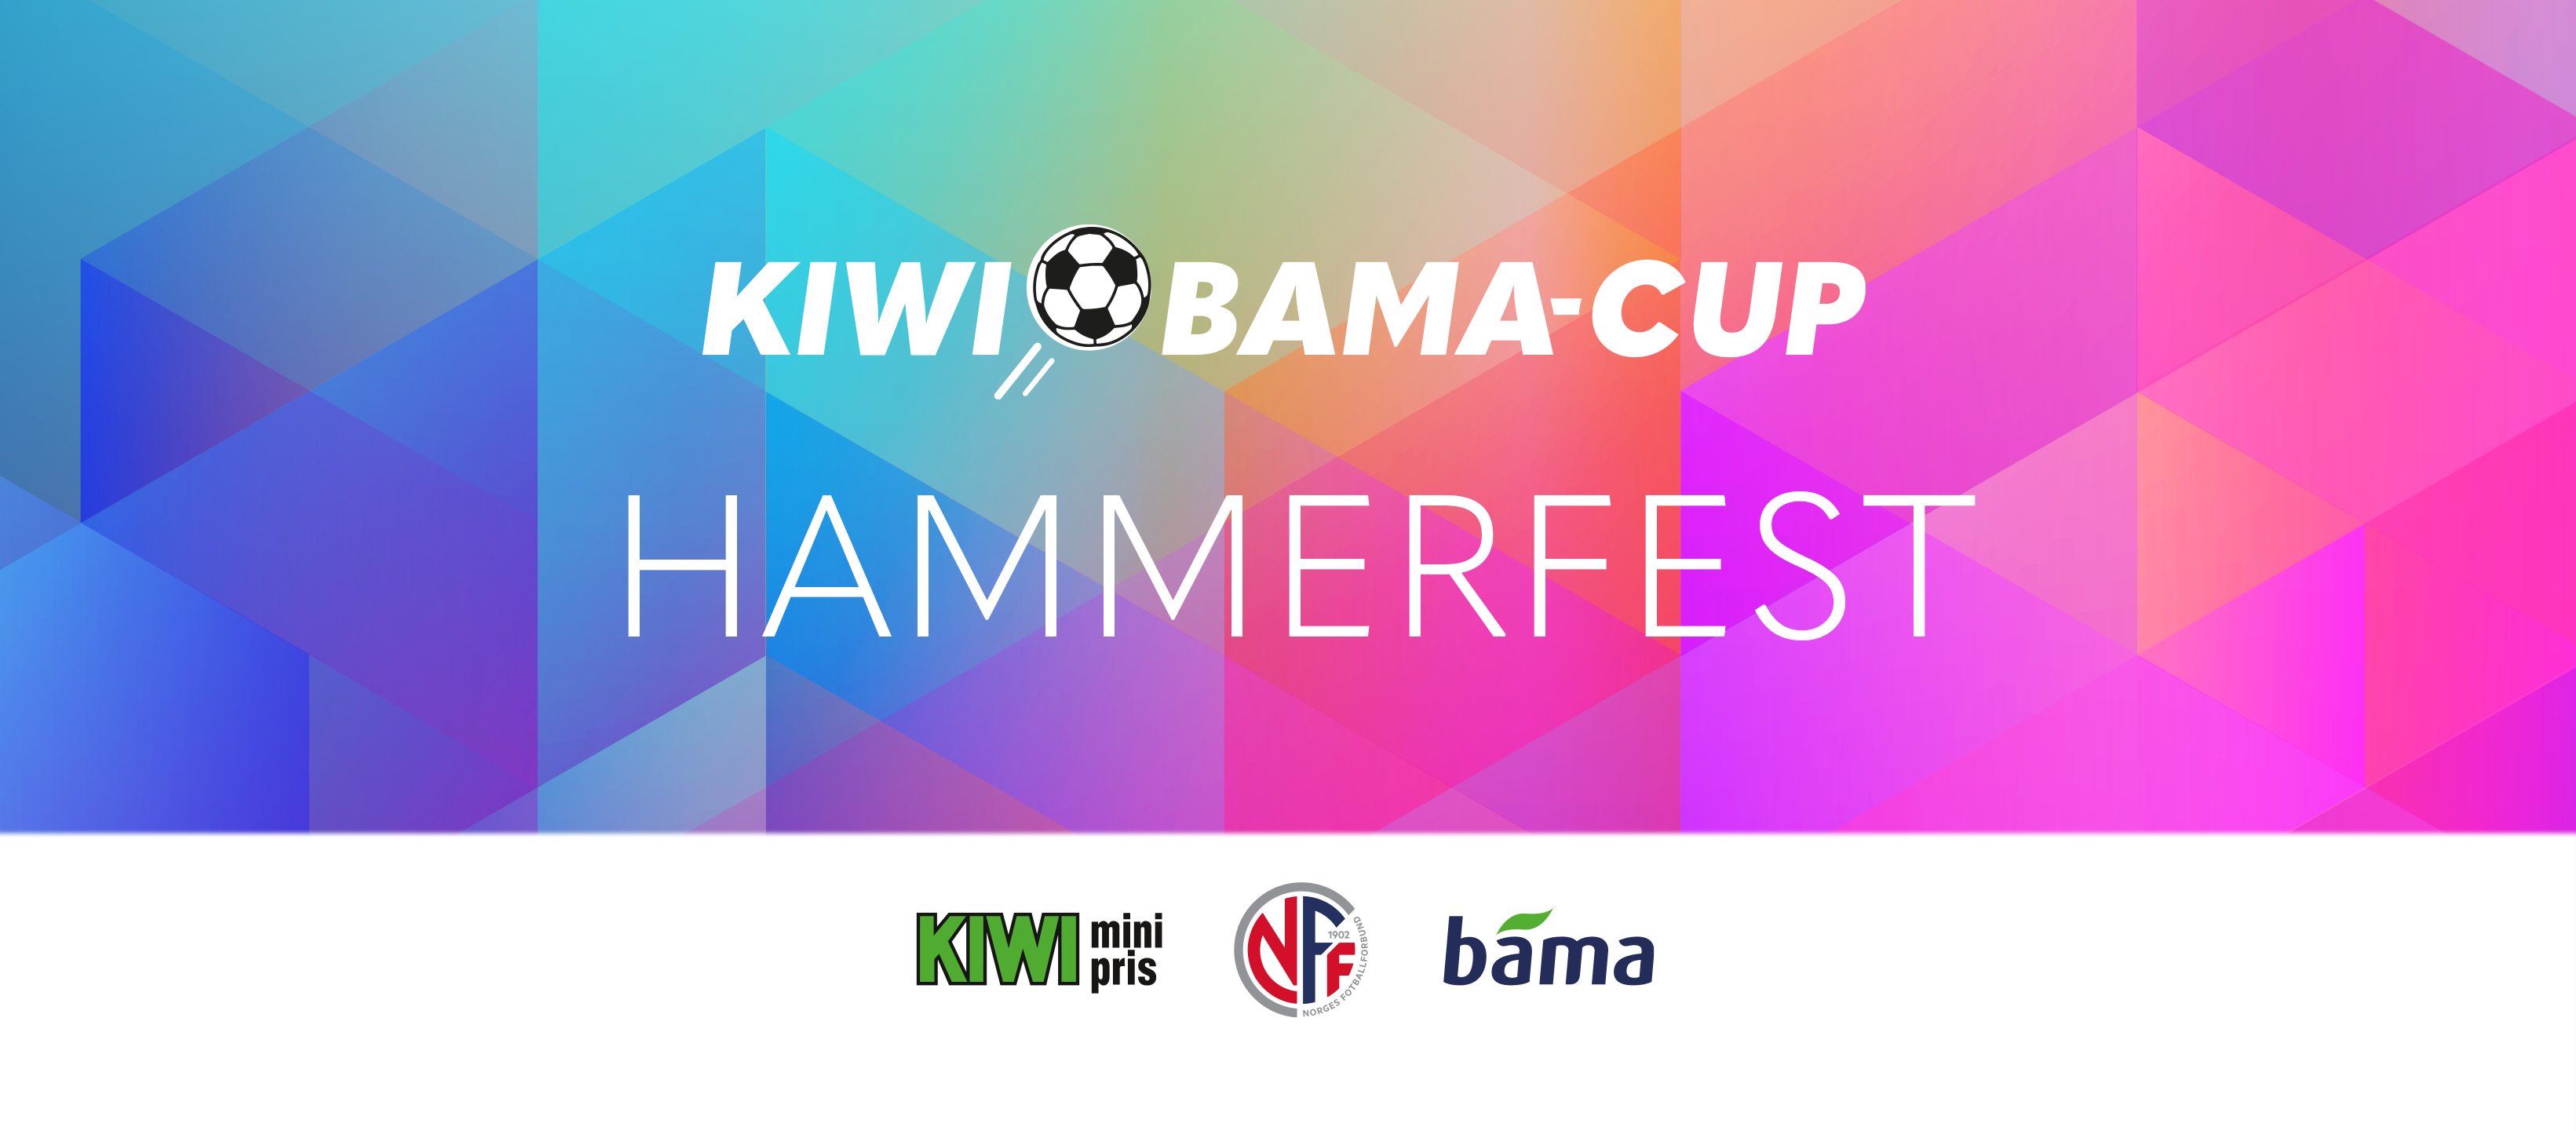 FB-BANNER KIWI-BAMA-Cup - Hammerfest_.png